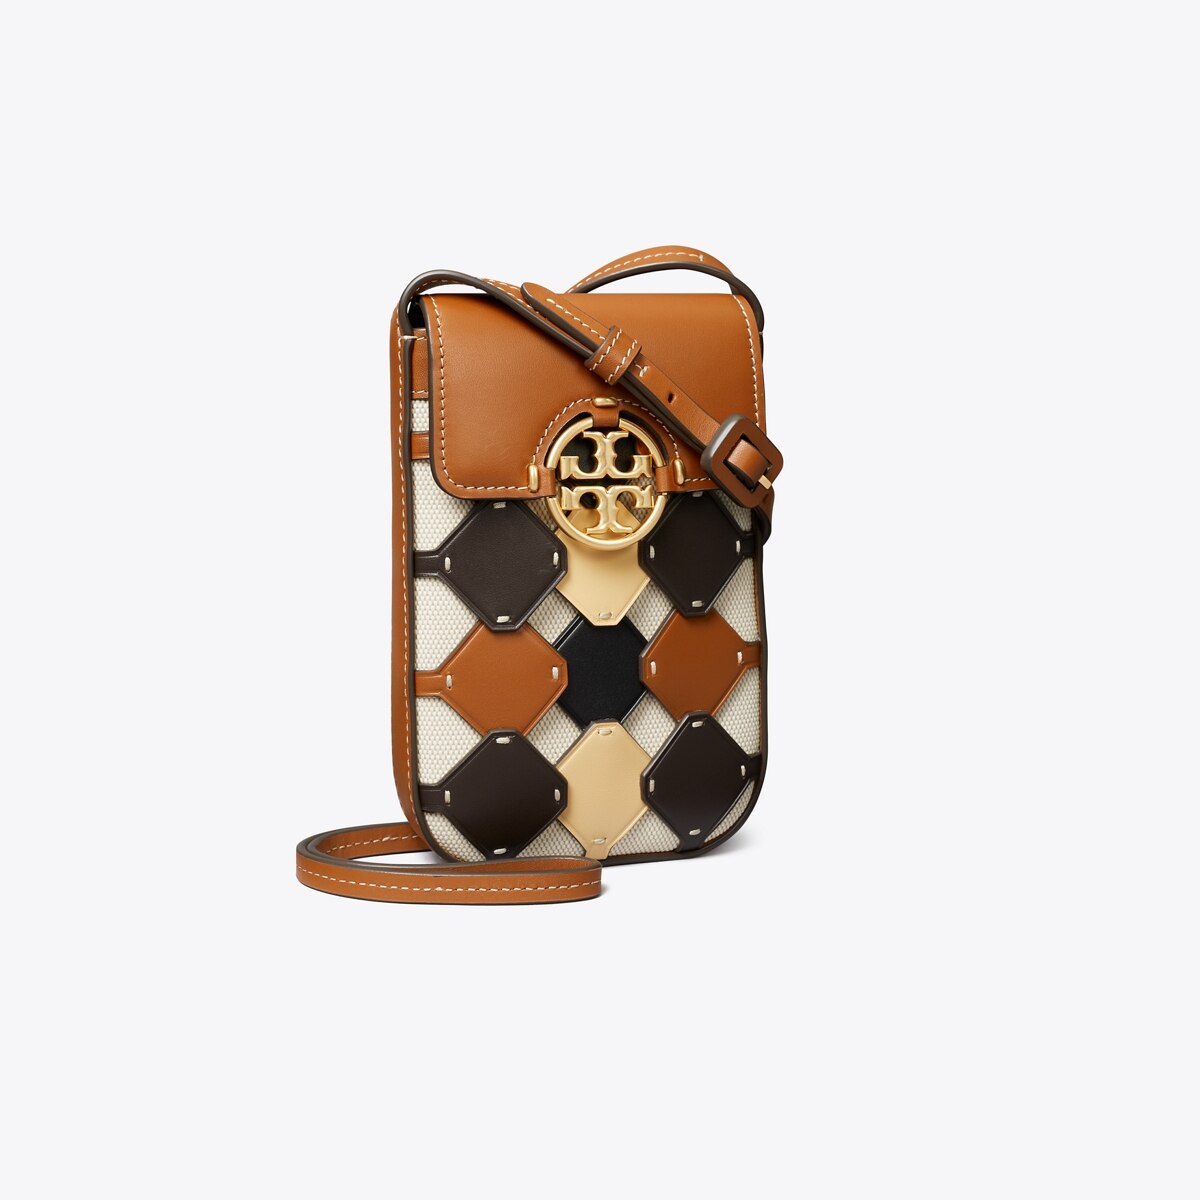 Miller Phone Crossbody: Women's Designer Mini Bags